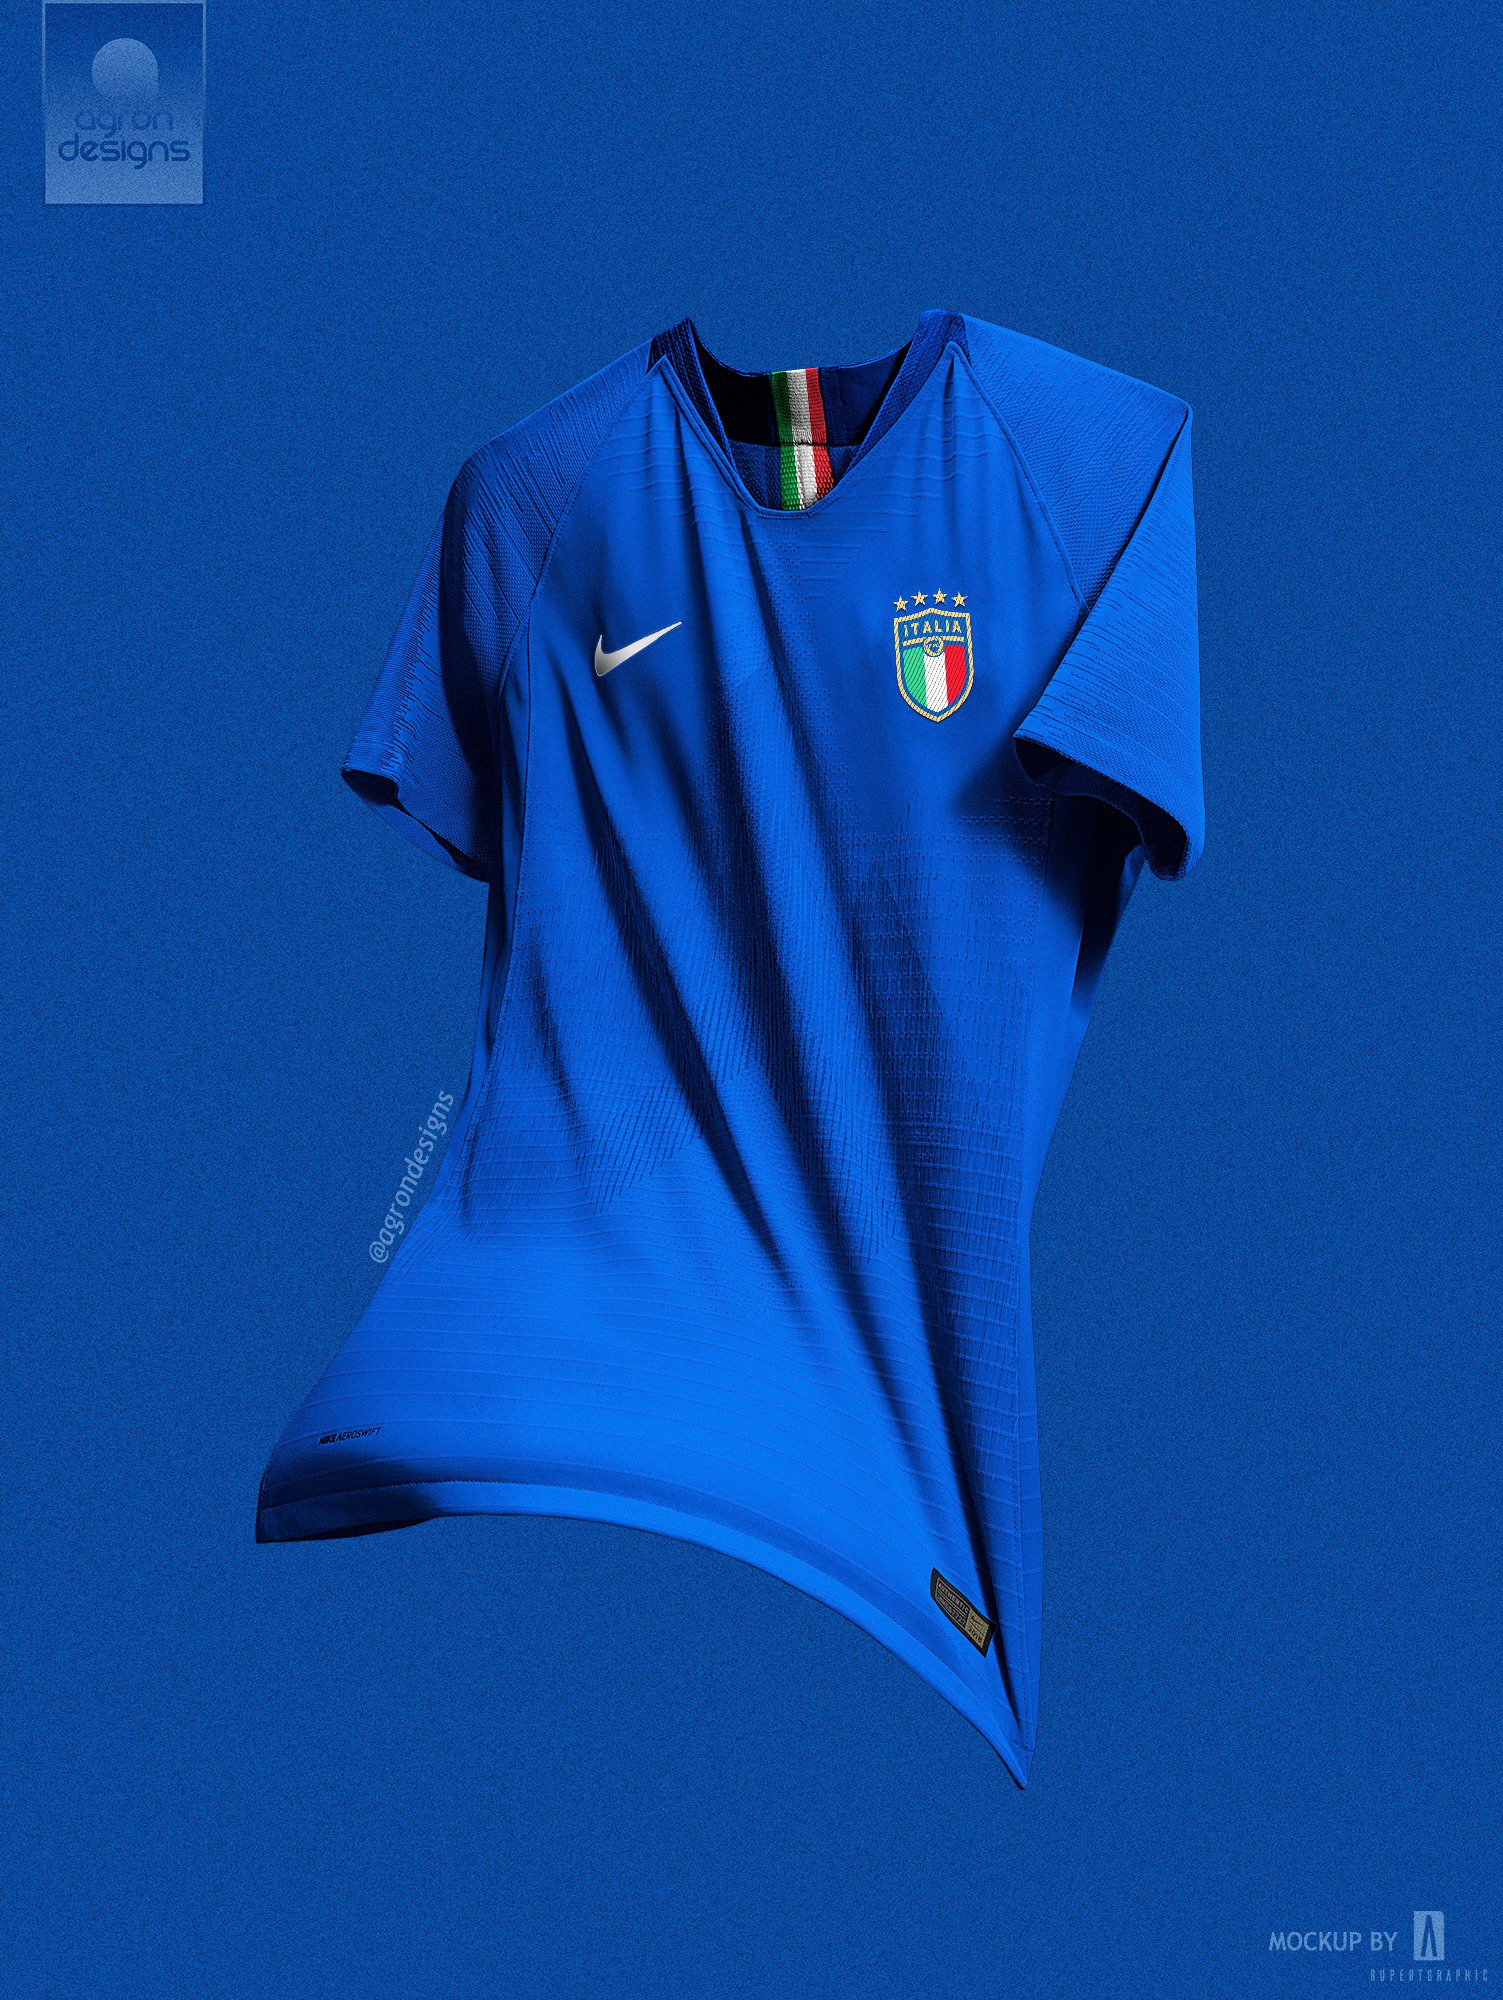 Найк италия. Nike t Shirt Mockup. Nike Italy. Italy Football t Shirt Oceanic.